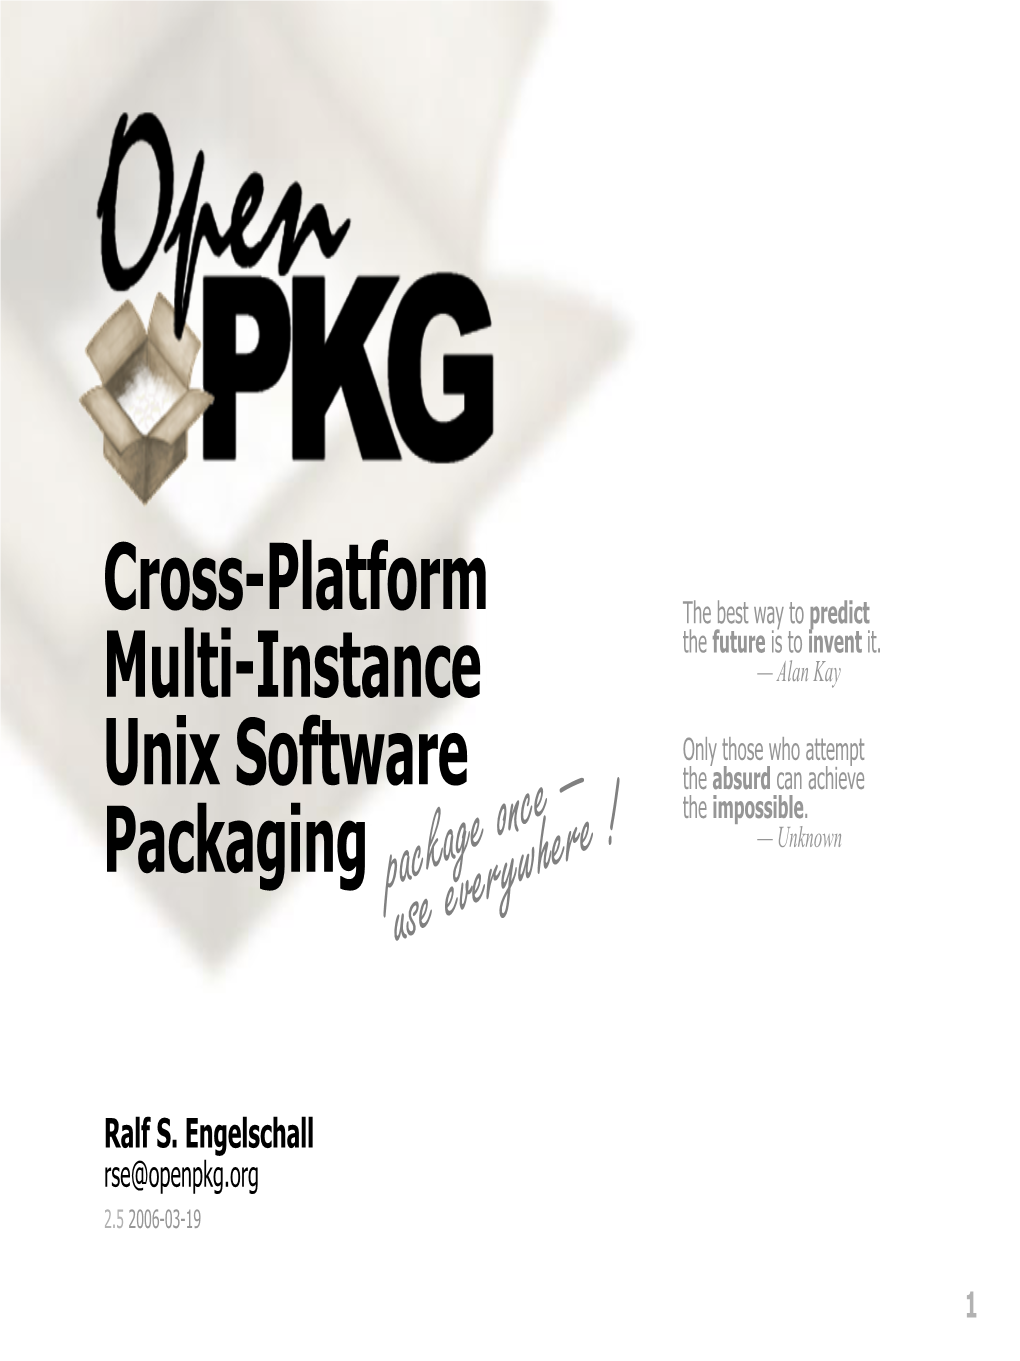 Cross-Platform Multi-Instance Unix Software Packaging Facility